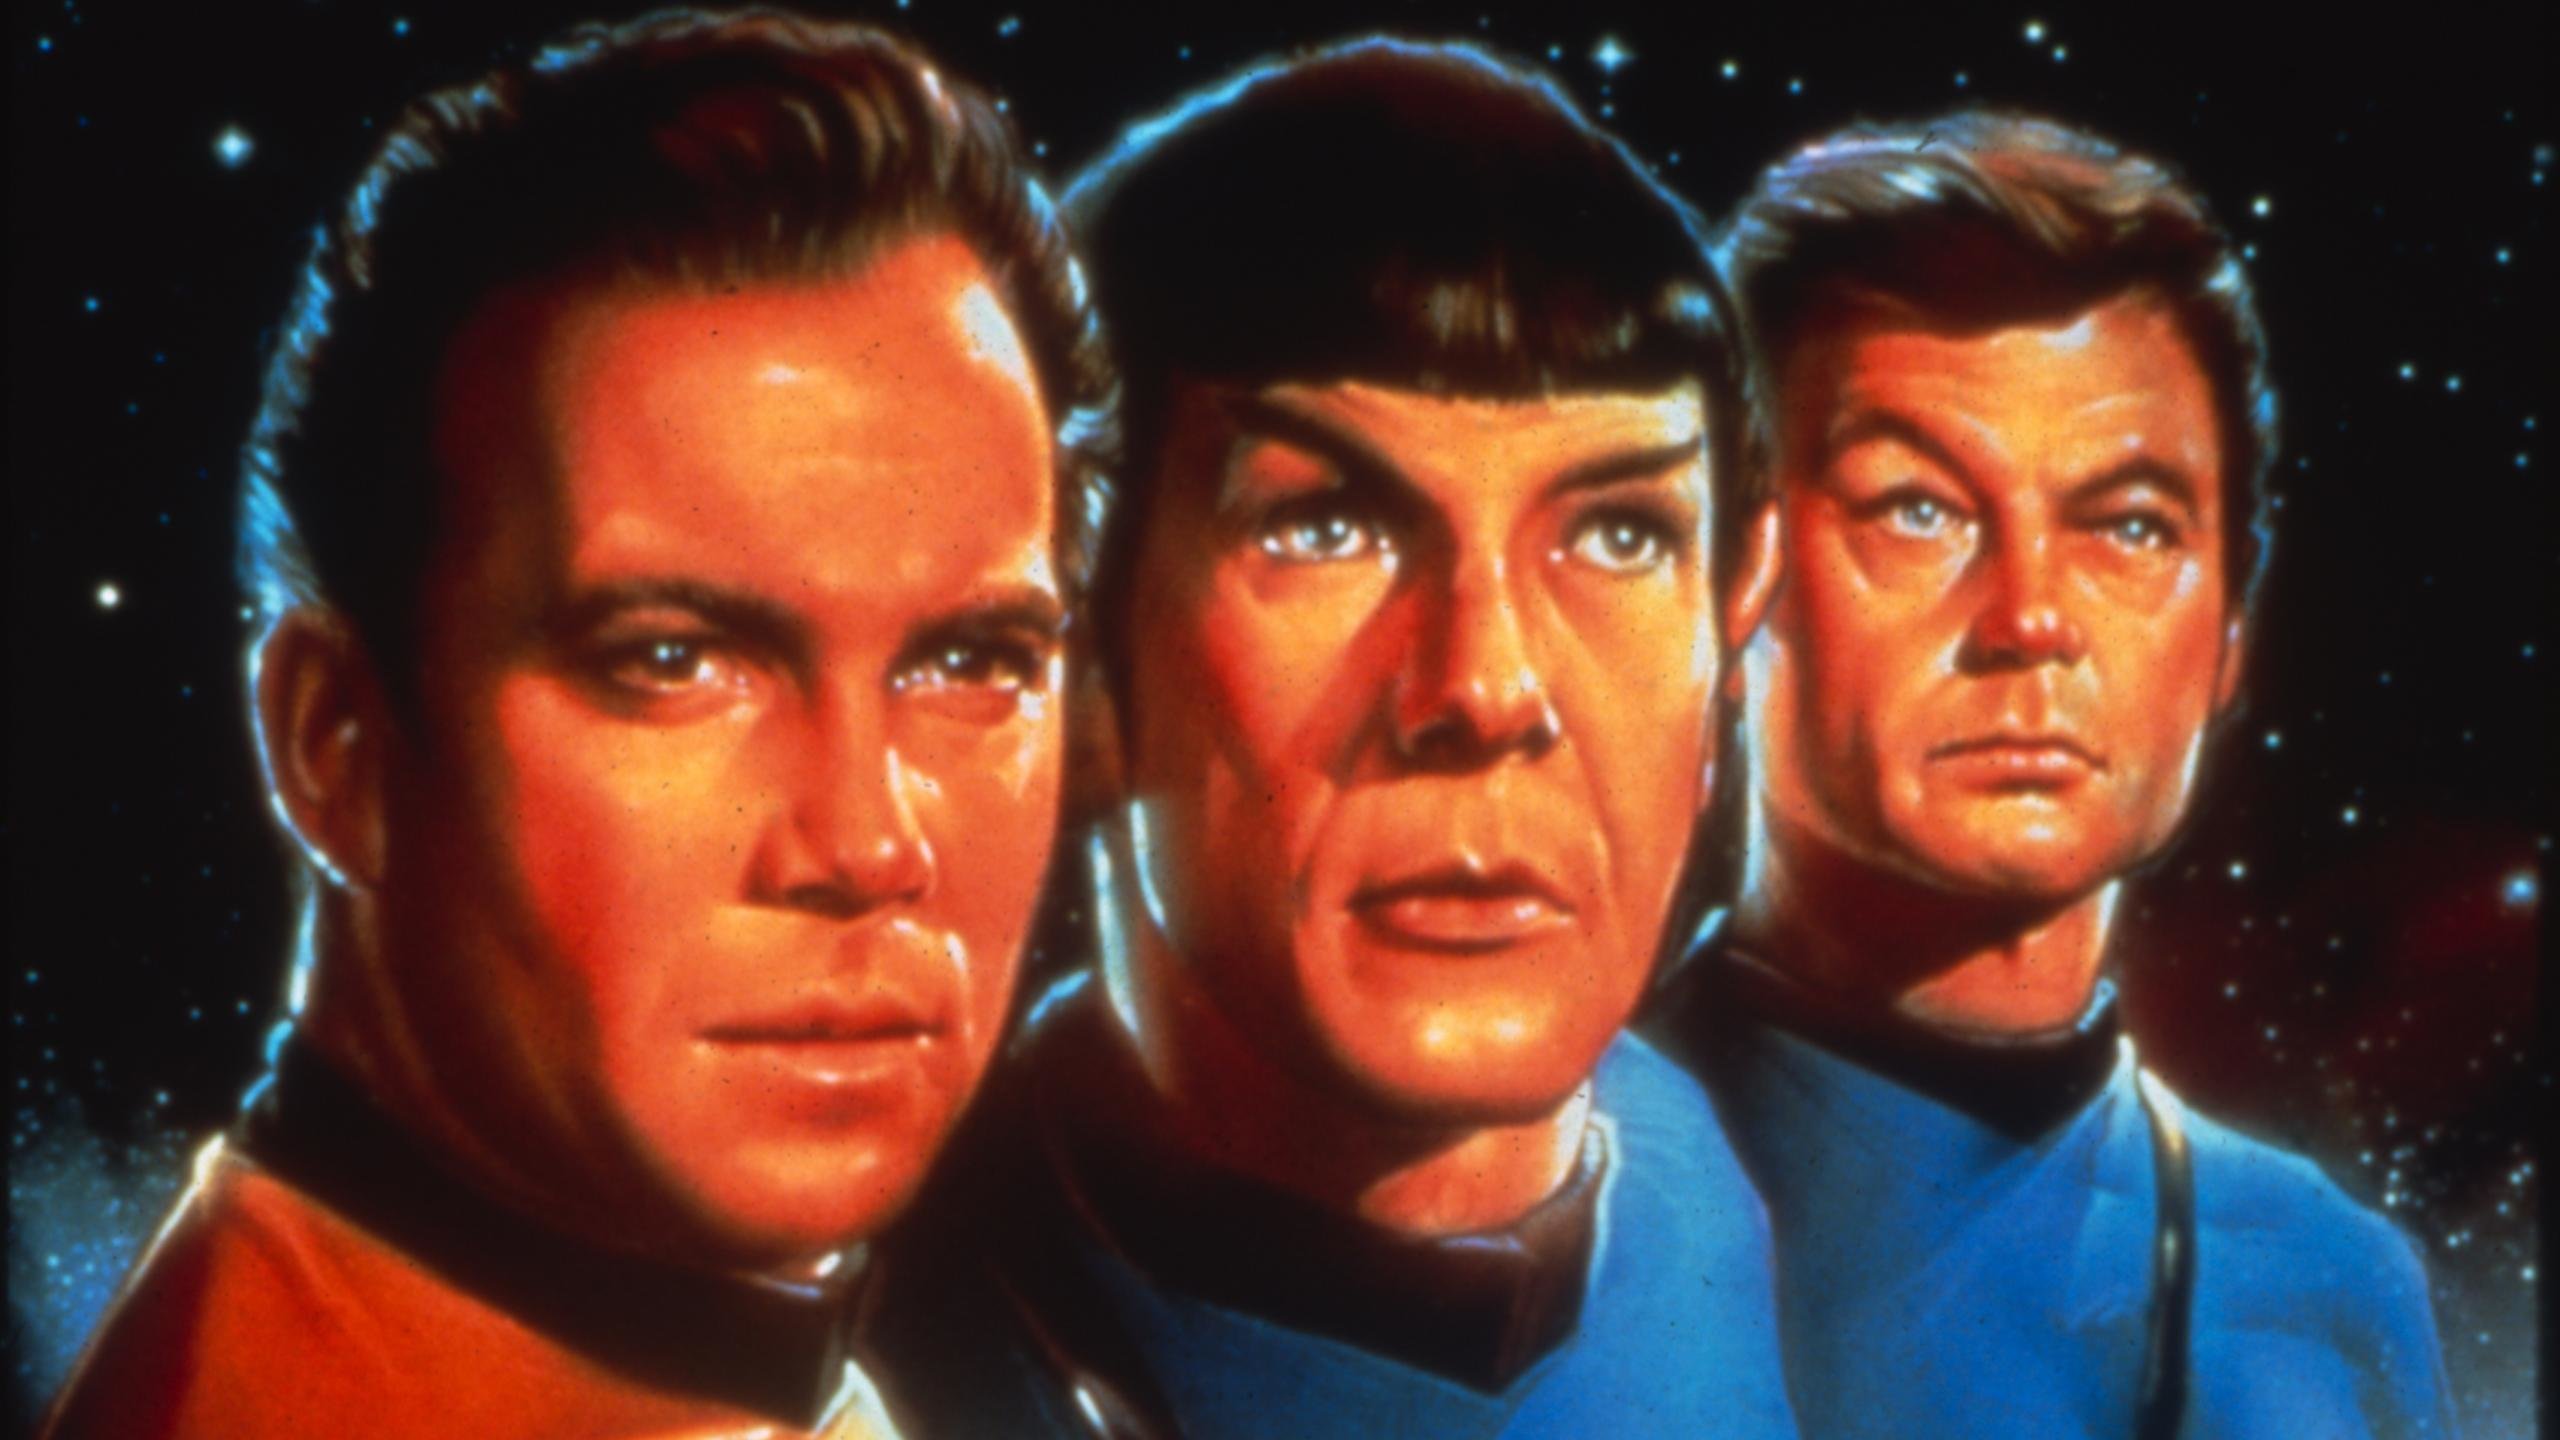 Download hd 2560x1440 Star Trek: The Original Series desktop background ID:197981 for free